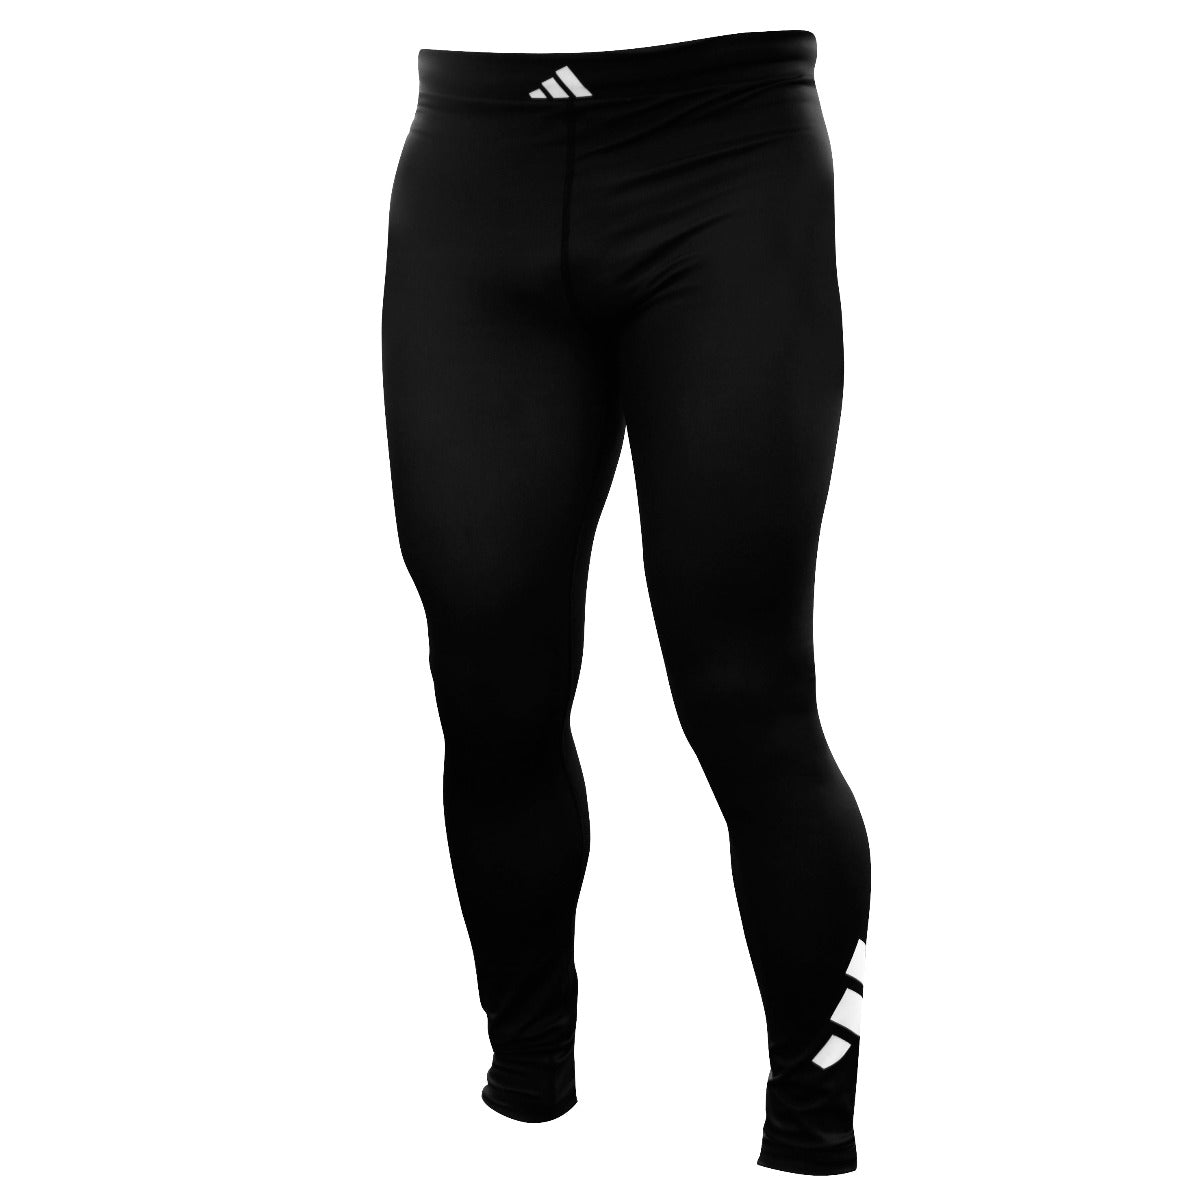 Pantalon De Compression Adidas - Noir/Blanc